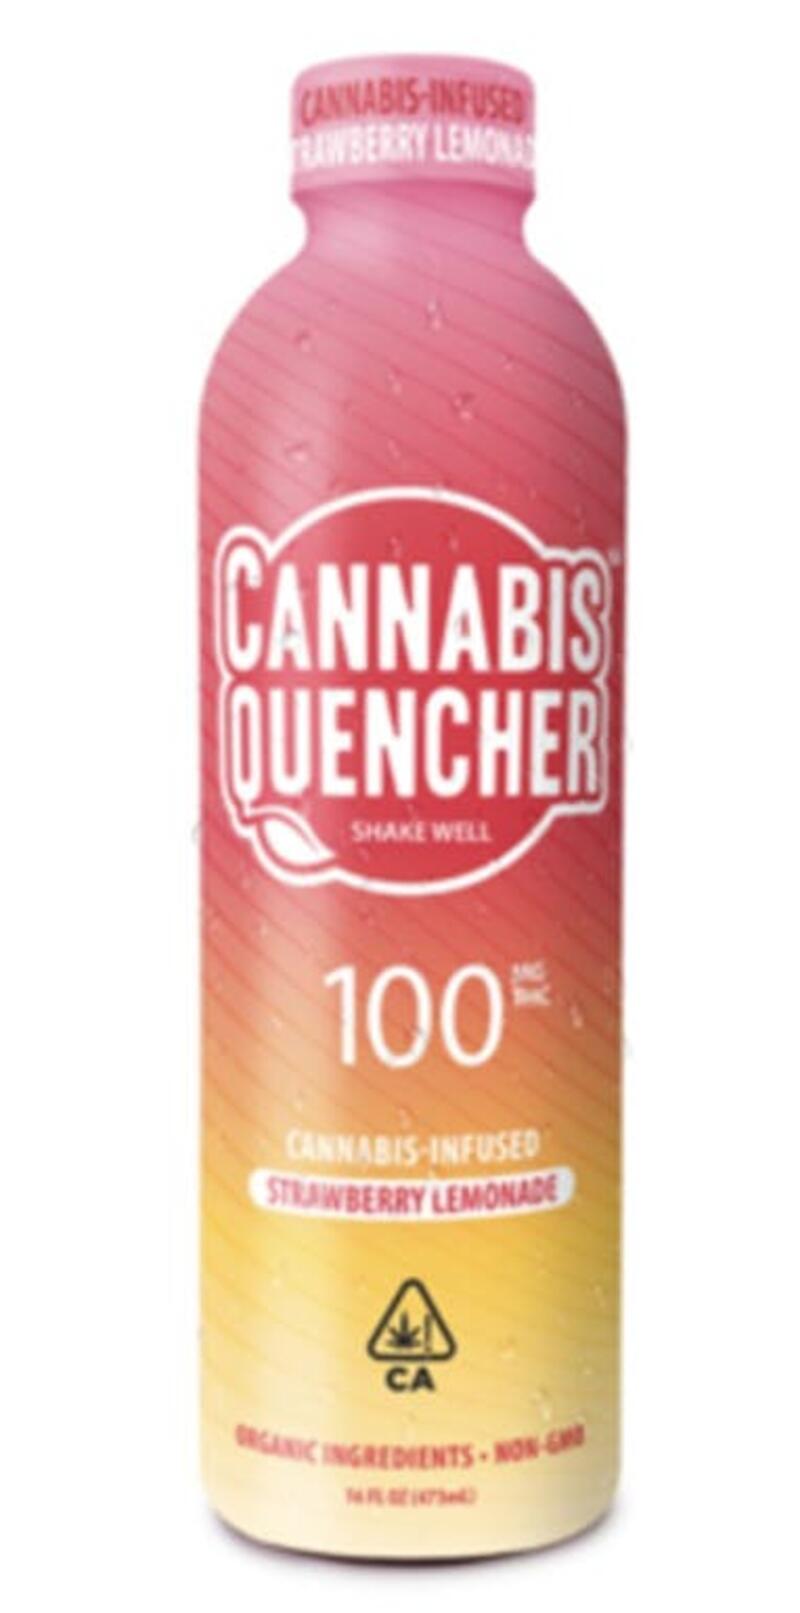 Cannabis Quencher - Strawberry Lemonade 100mg